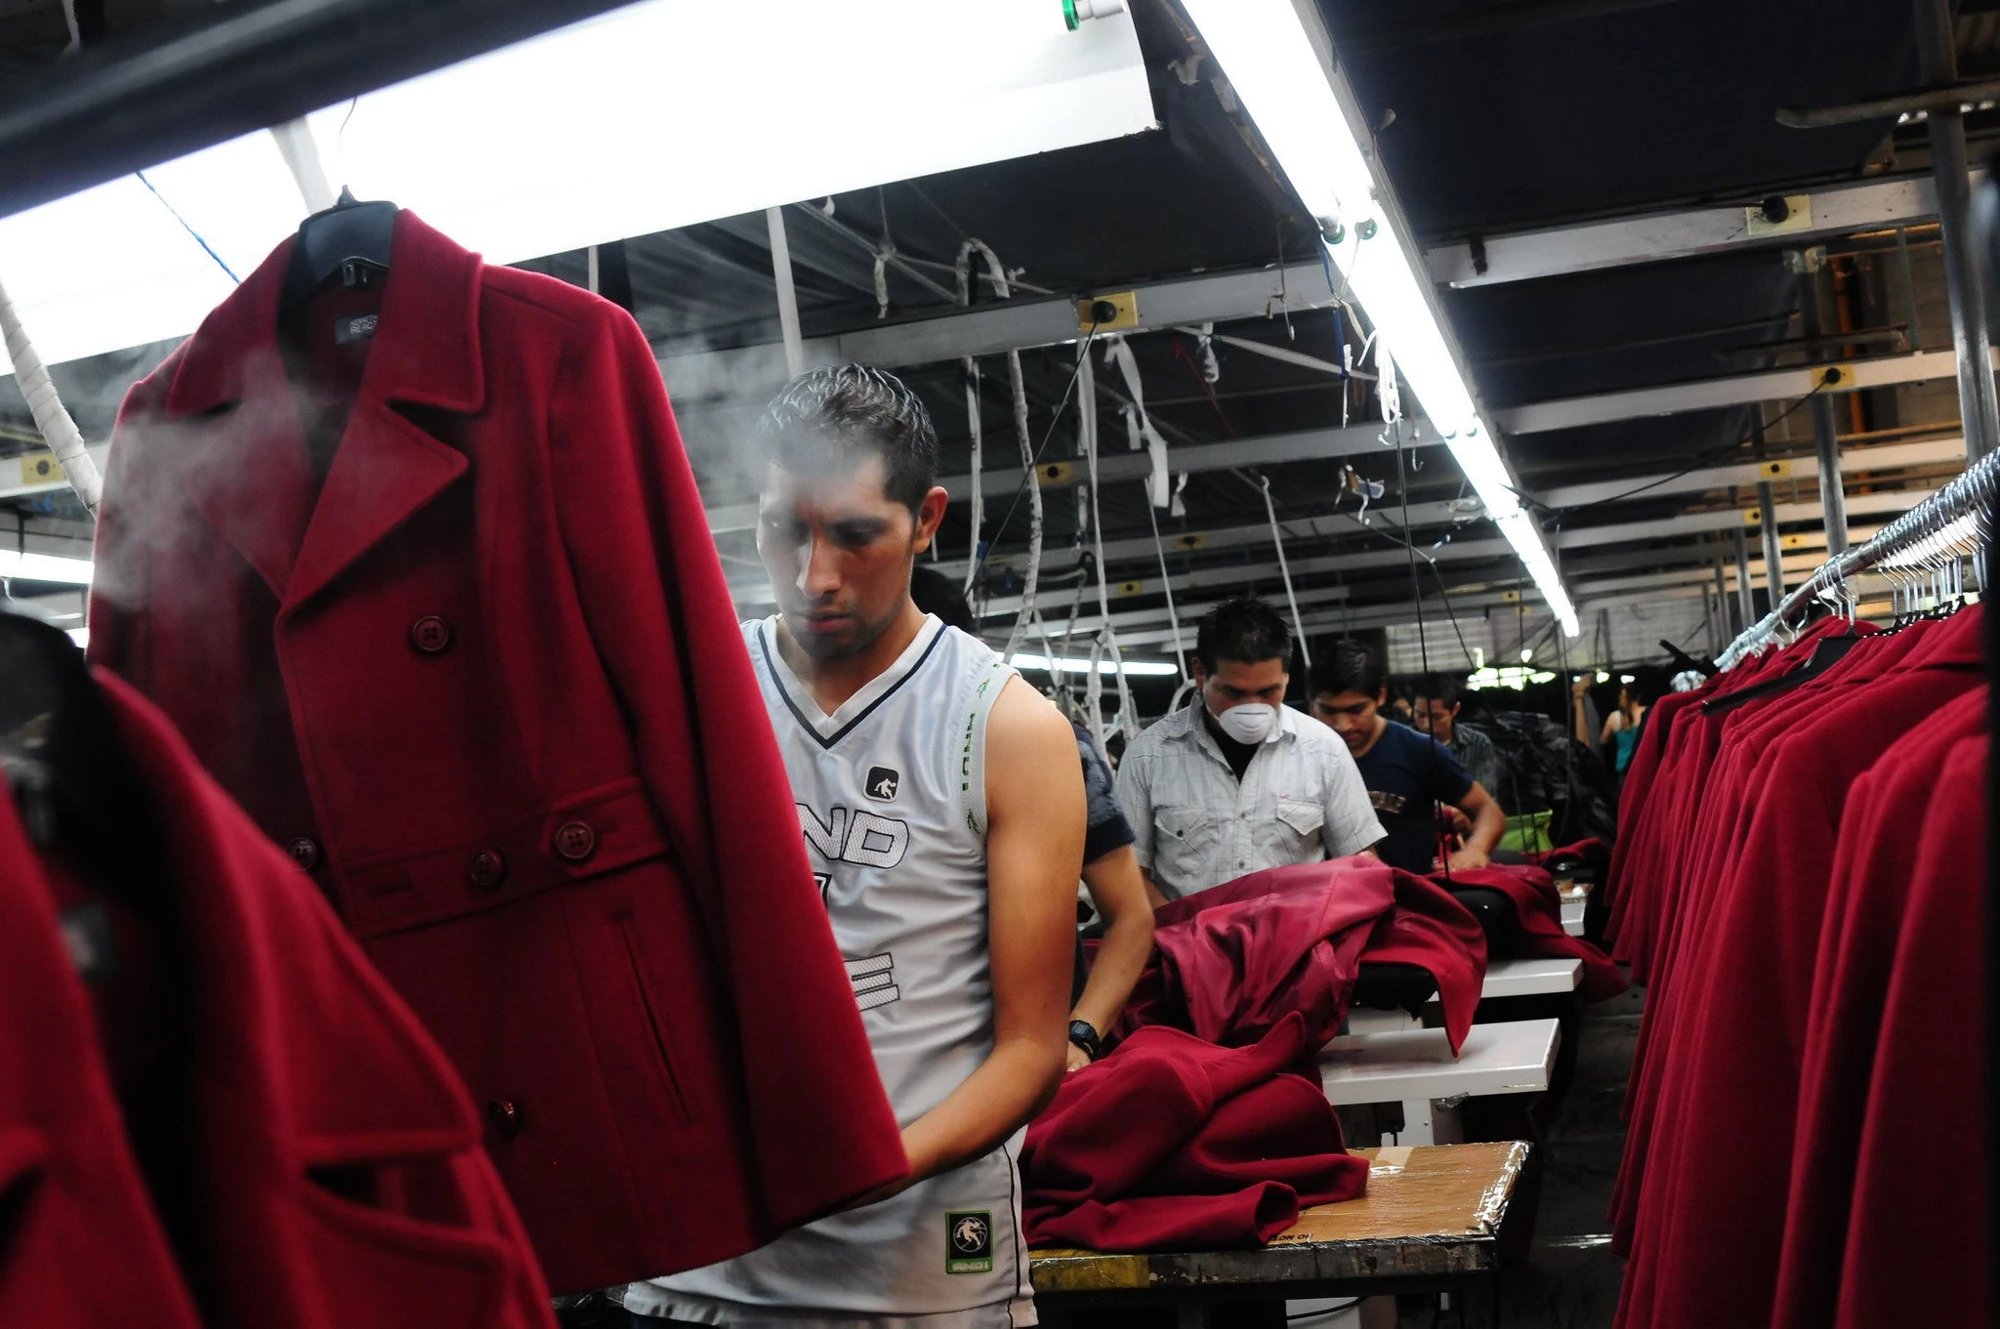 Men assemble women's coats in a manufacturing factory